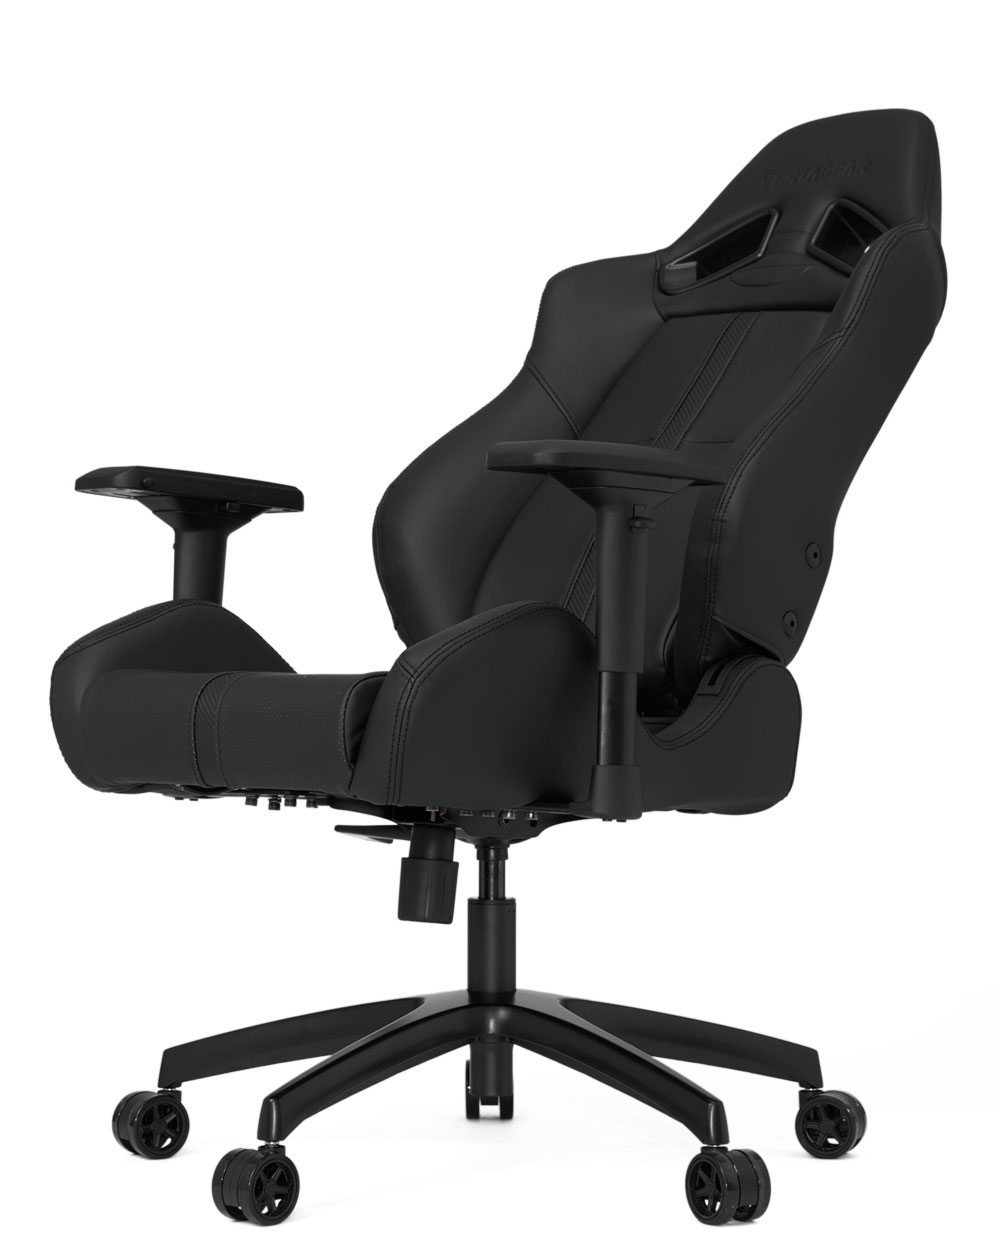 Vertagear SL5000 Gaming Chair Black / Carbon